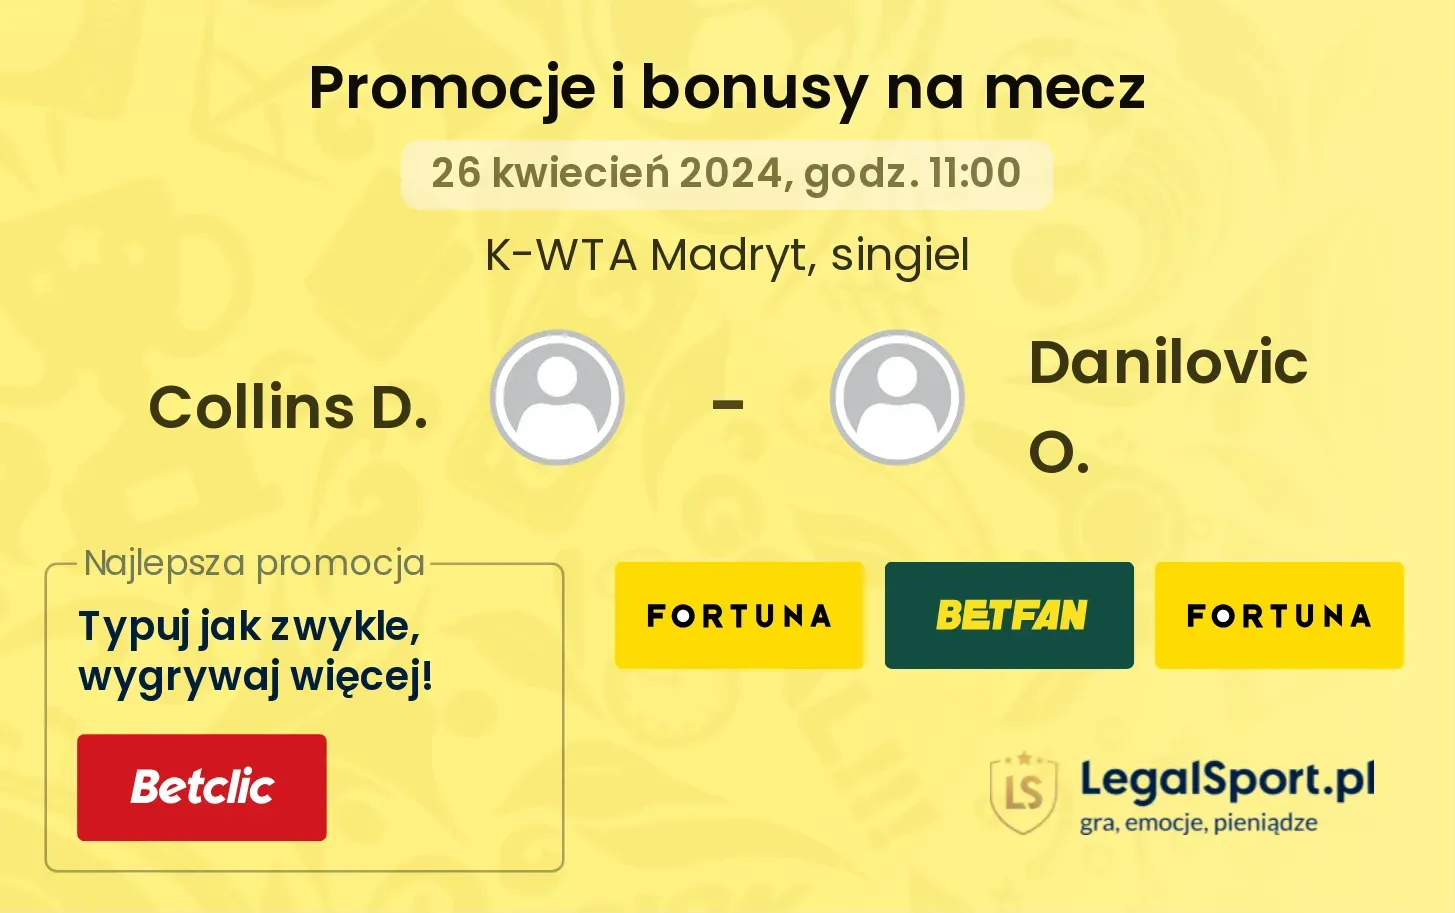 Collins D. - Danilovic O. promocje bonusy na mecz